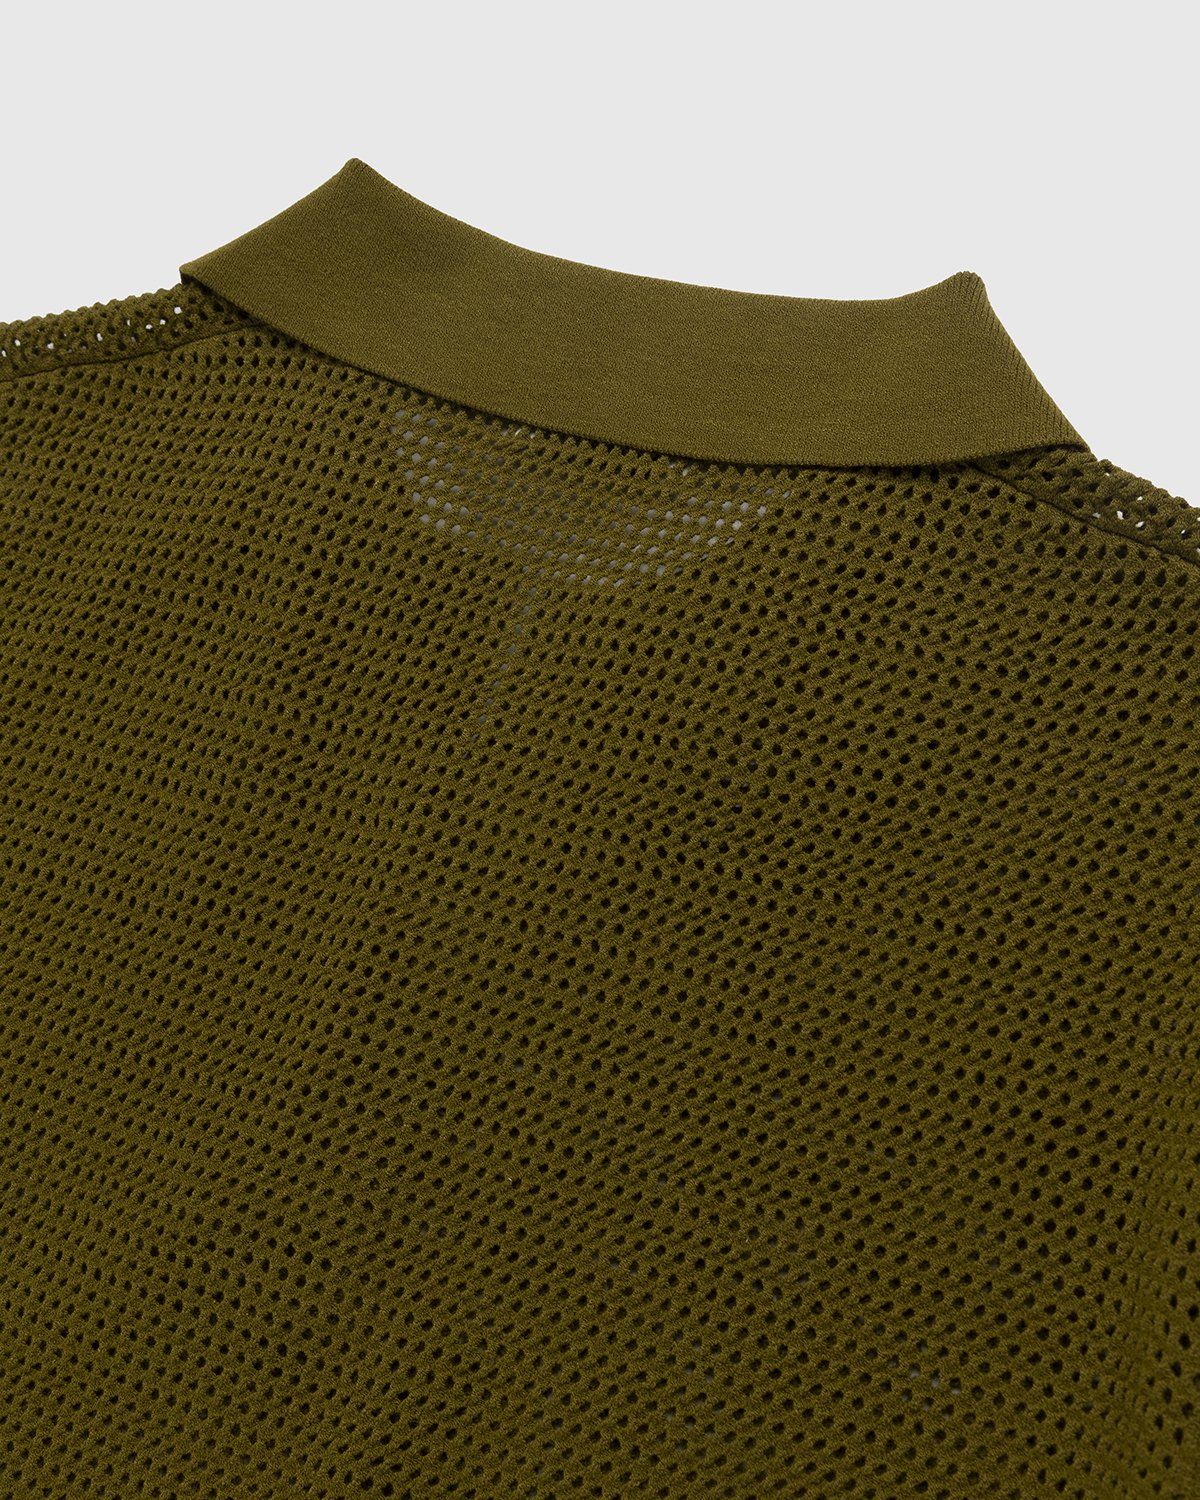 Dries van Noten – Jael Polo Shirt Olive - Polos - Green - Image 3